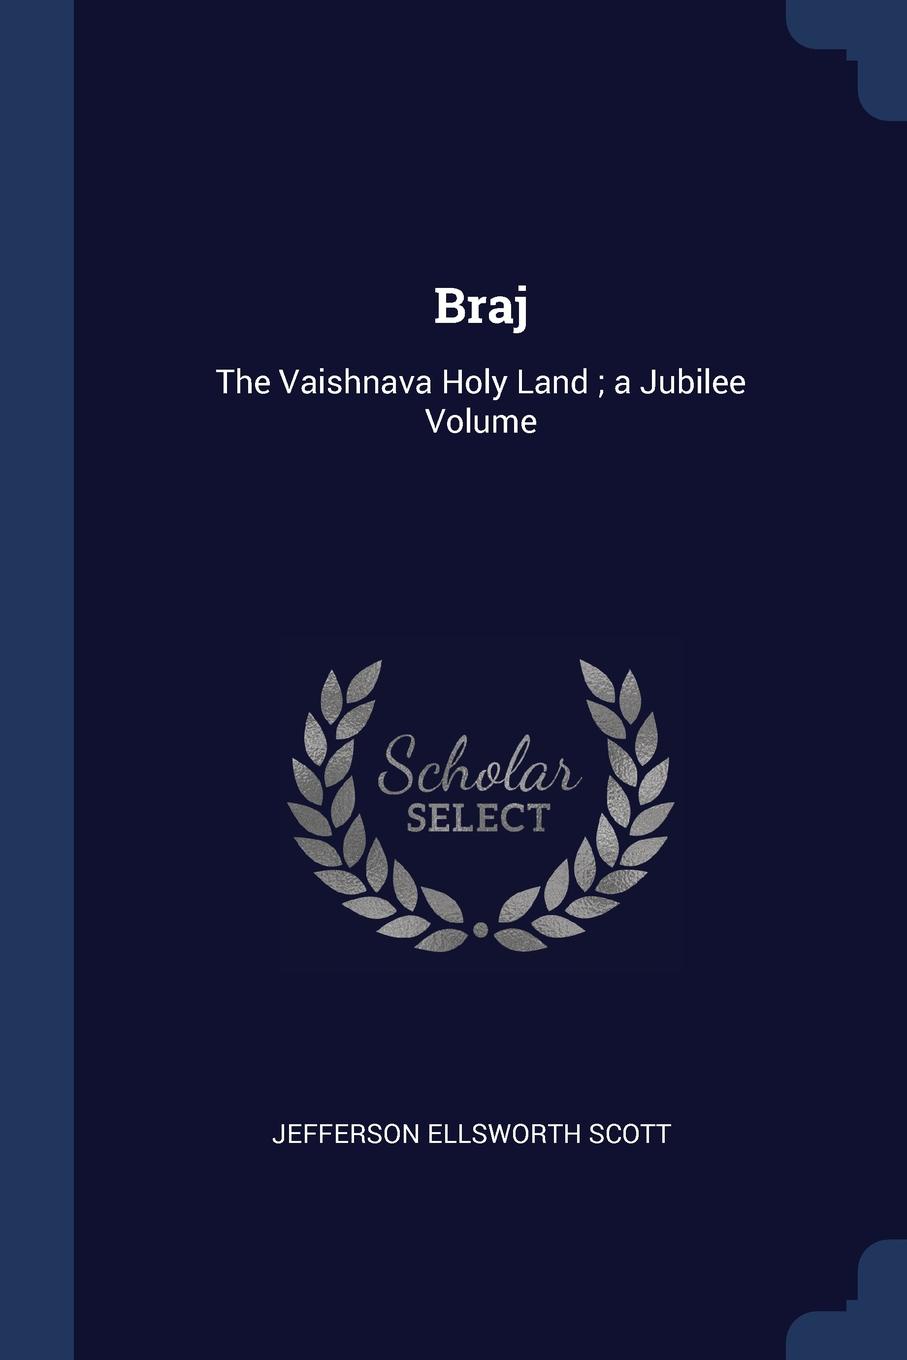 Braj. The Vaishnava Holy Land ; a Jubilee Volume